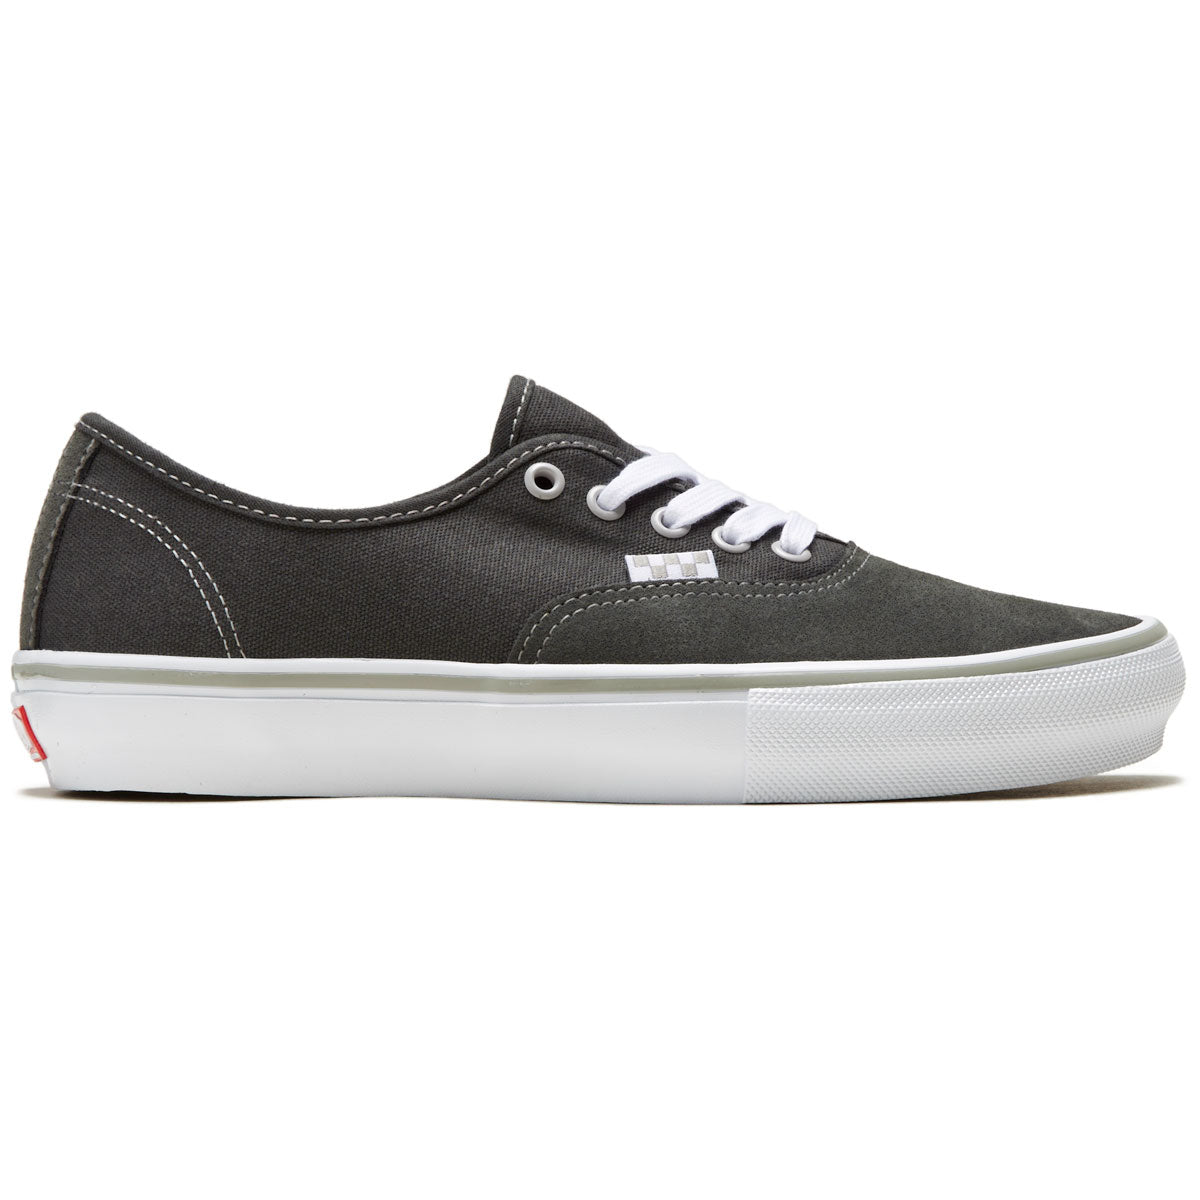 Vans Skate Authentic Shoes - Dark Grey/White